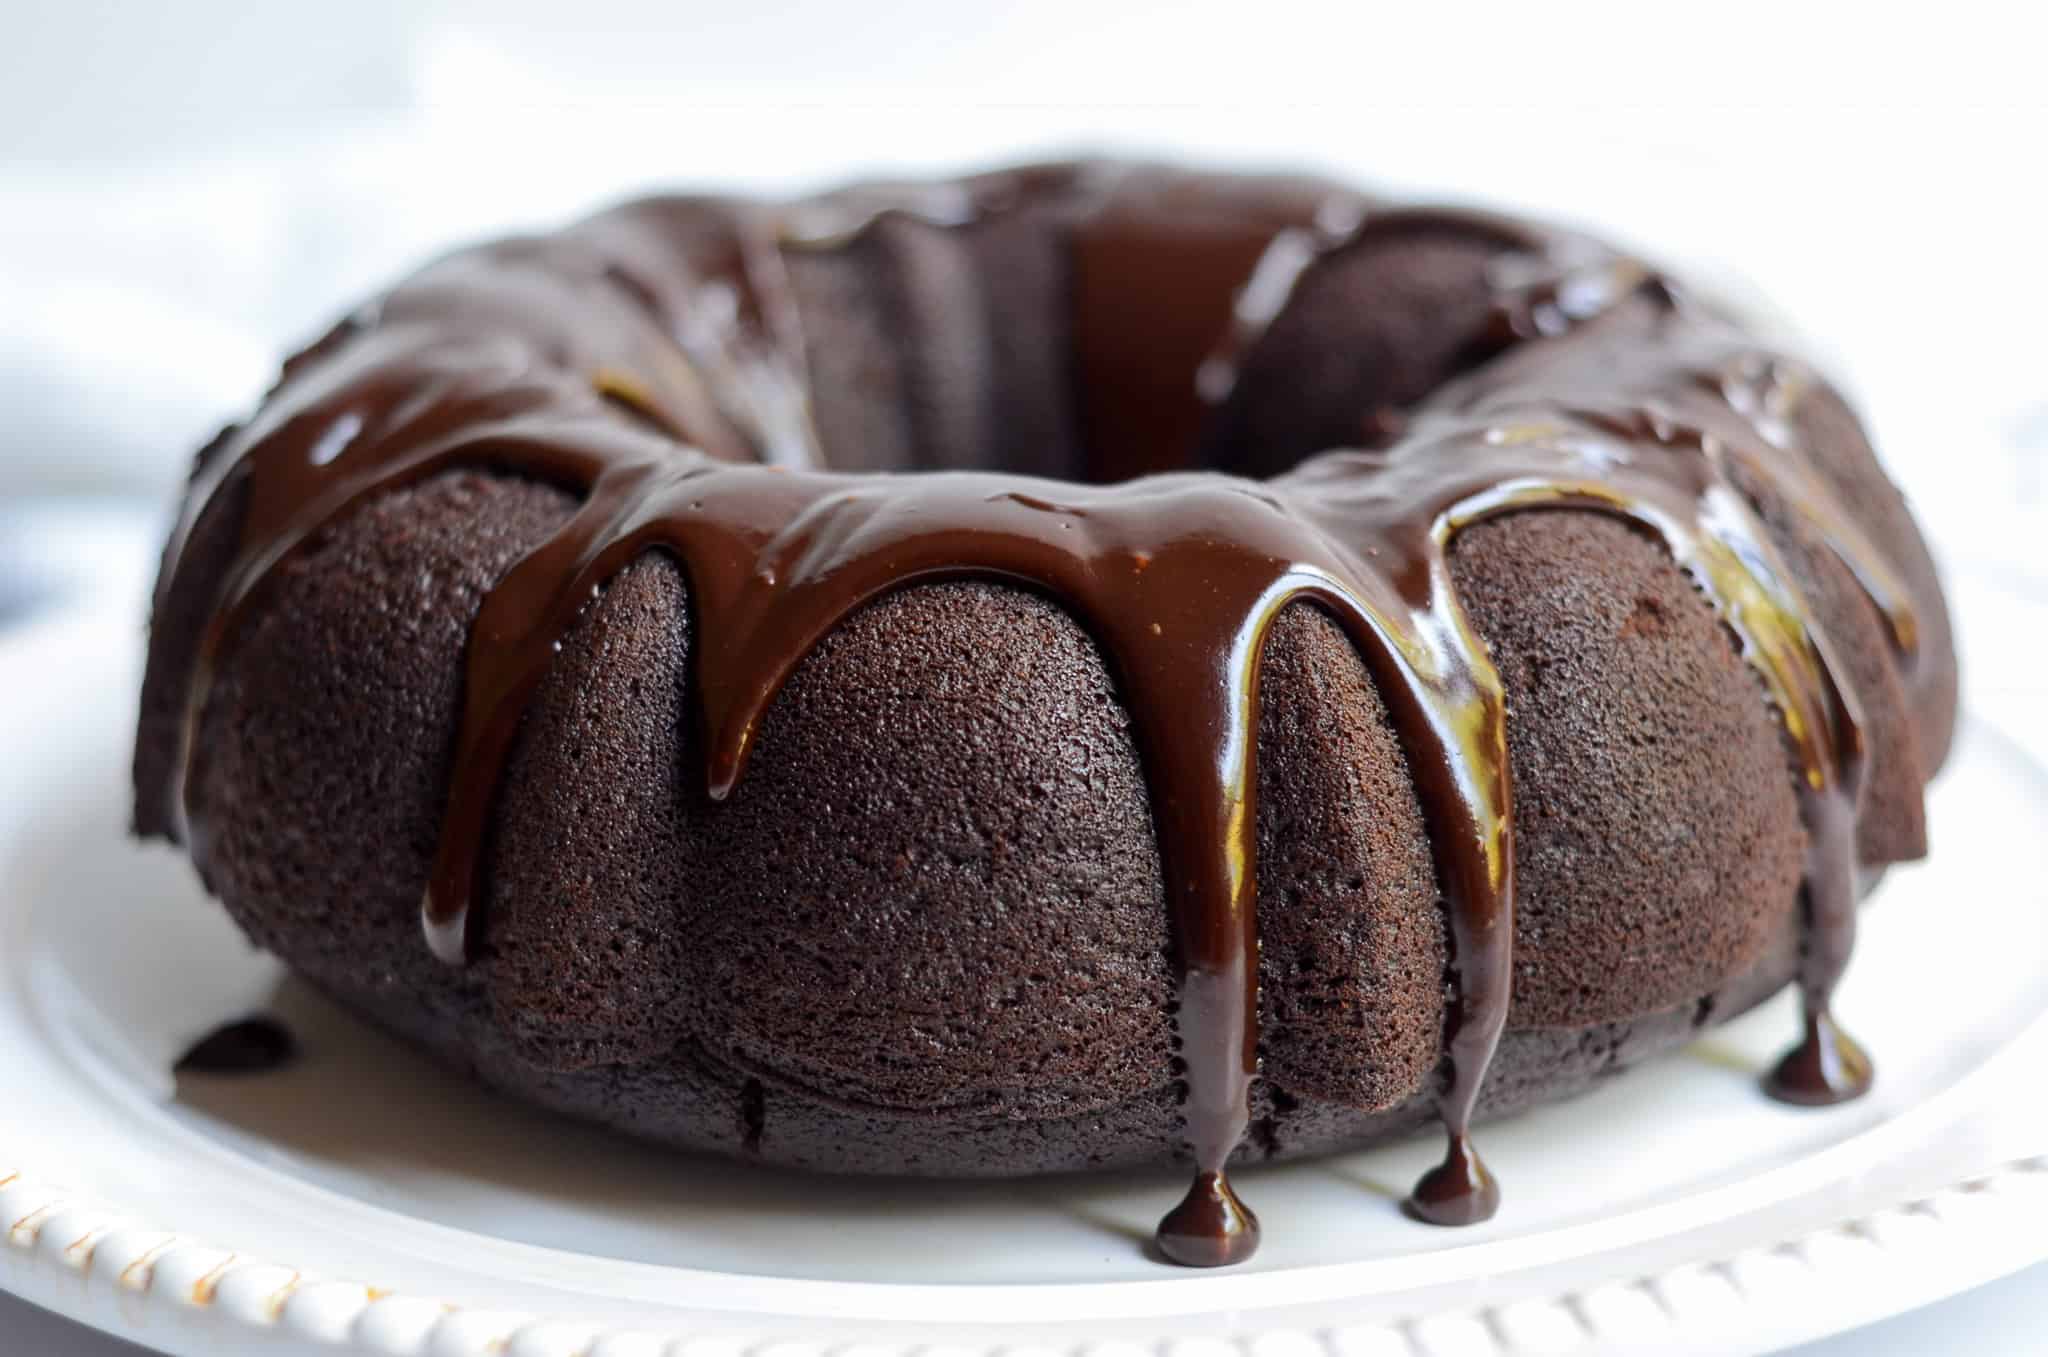 Double Chocolate Bundt Cake with Chocolate Ganache